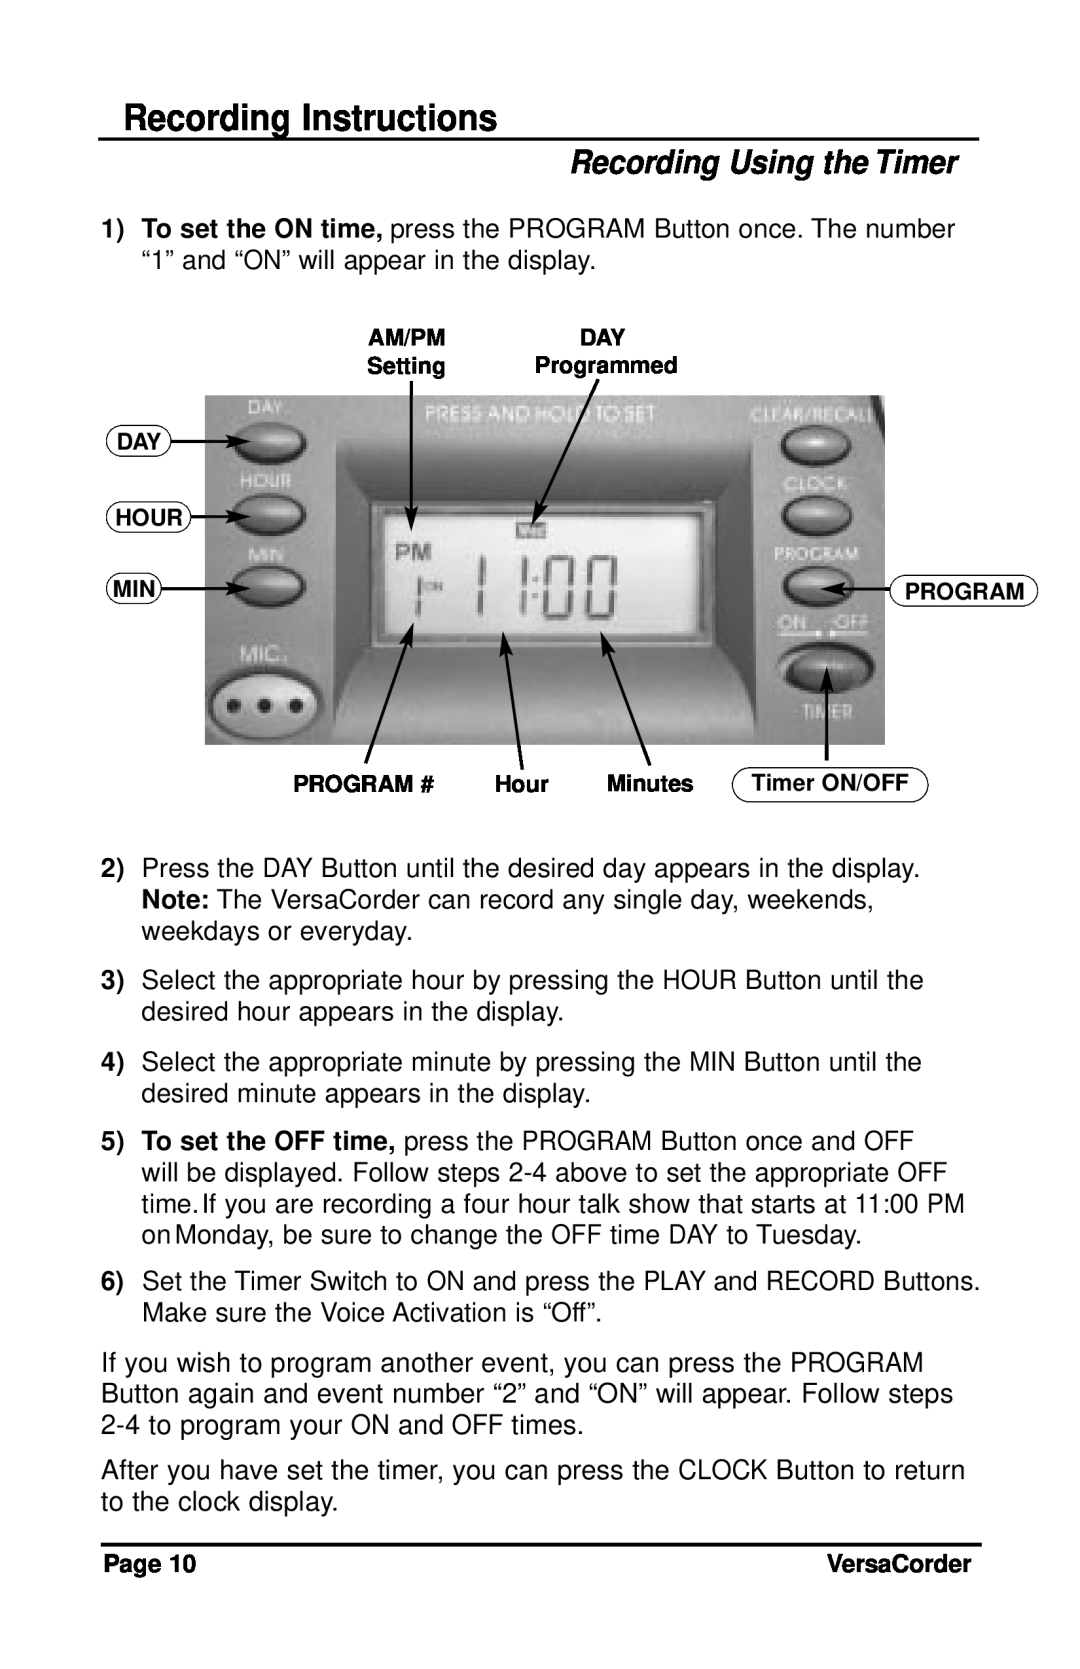 C. Crane VersaCorder Dual Speed Recorder Recording Using the Timer, Recording Instructions, Program #, Hour, Minutes 